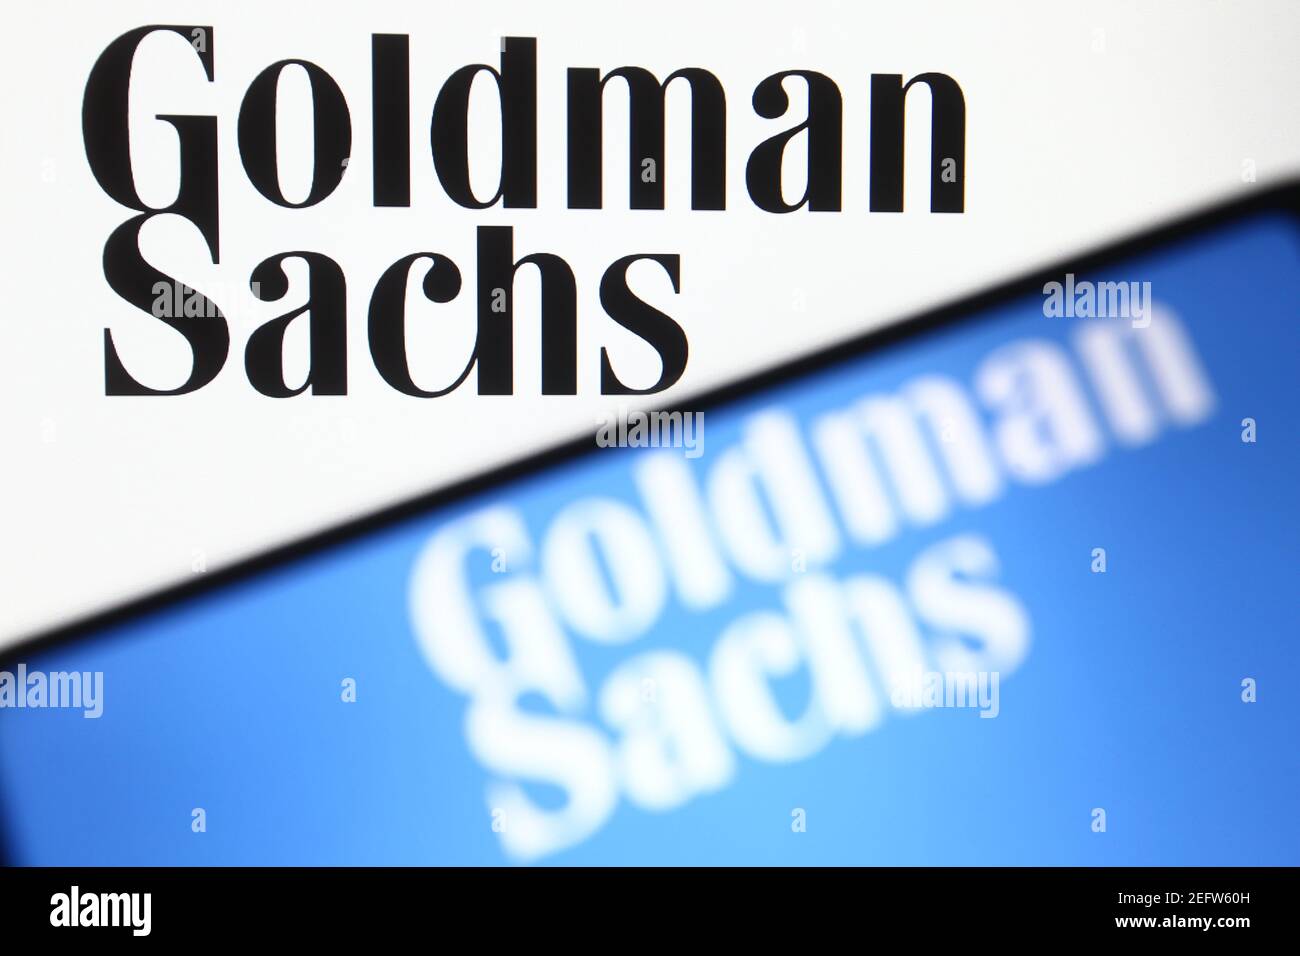 Goldman Sachs Logo High Resolution Stock Photography And Images Alamy